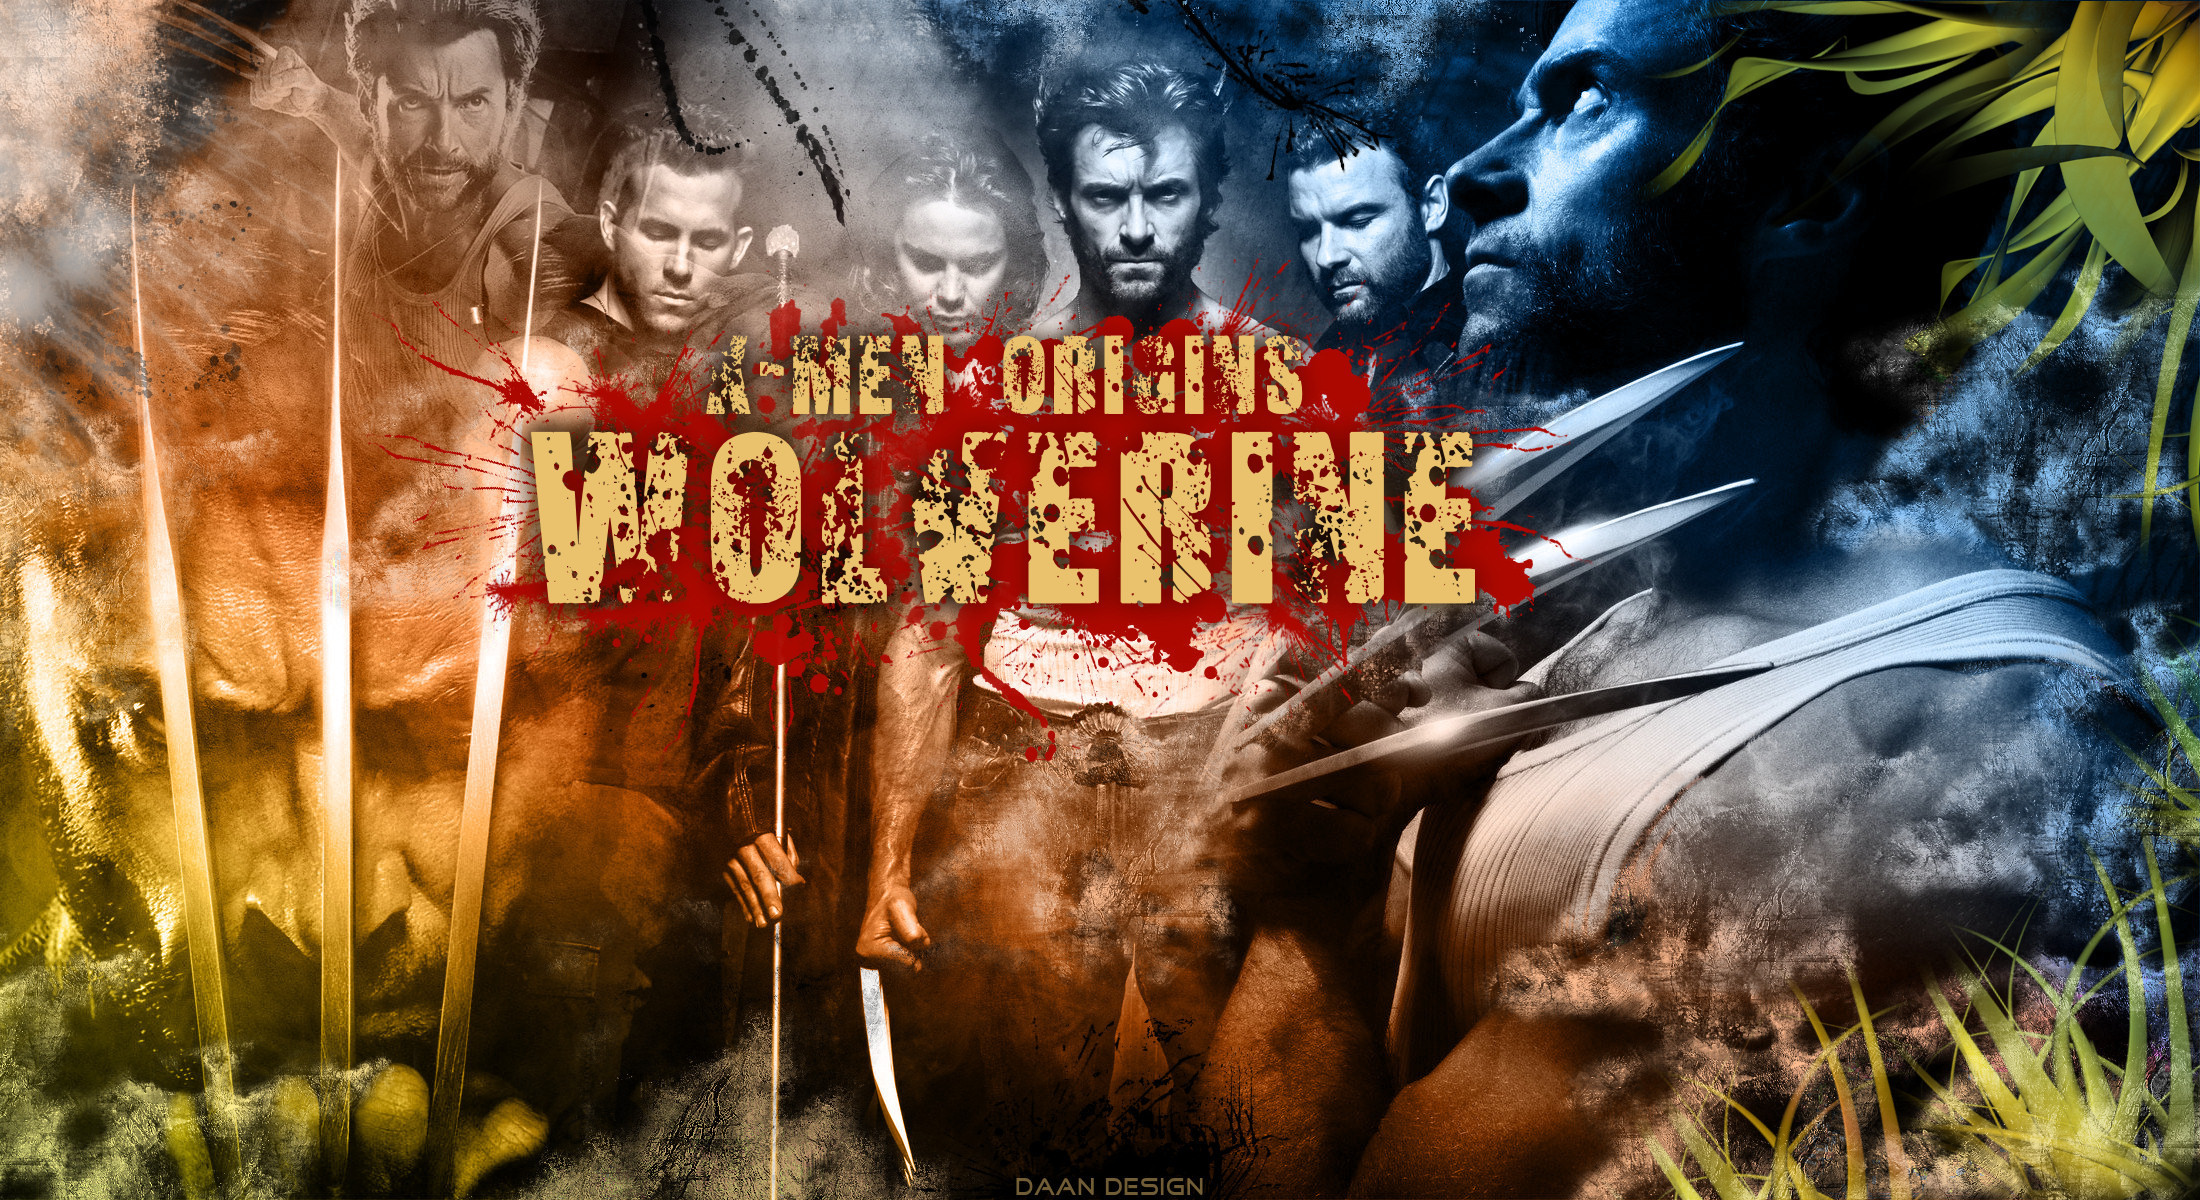 X-men Origins: Wolverine Wallpaper by Daan Design [Awesome] - X ...